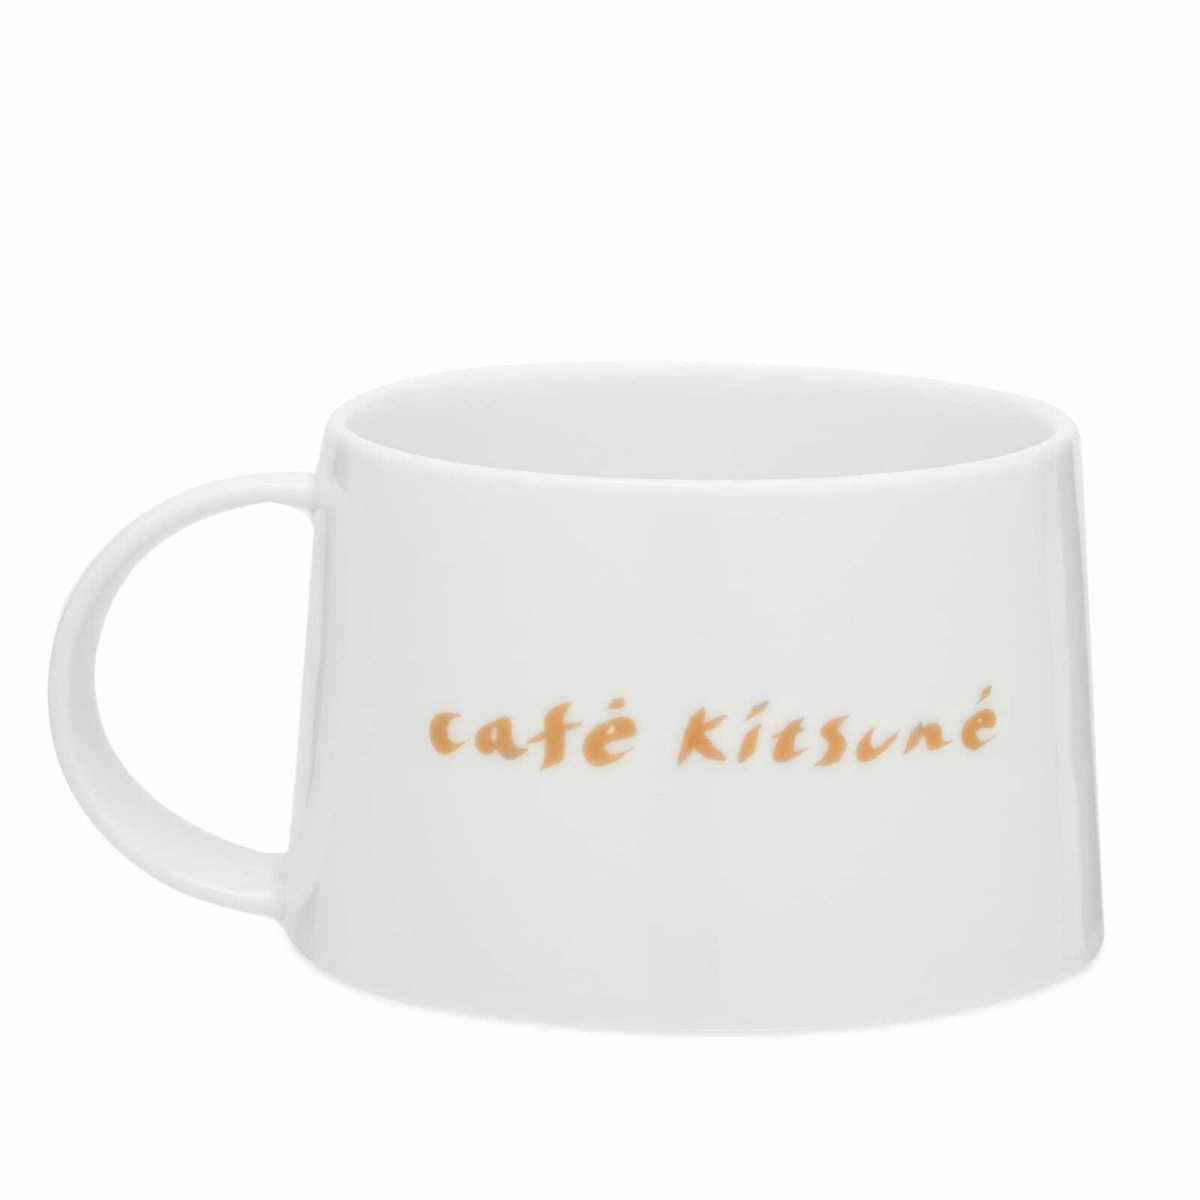 Maison Kitsuné Men's Cafe Kitsune X Kihara Mug Kms in Iced Coffee